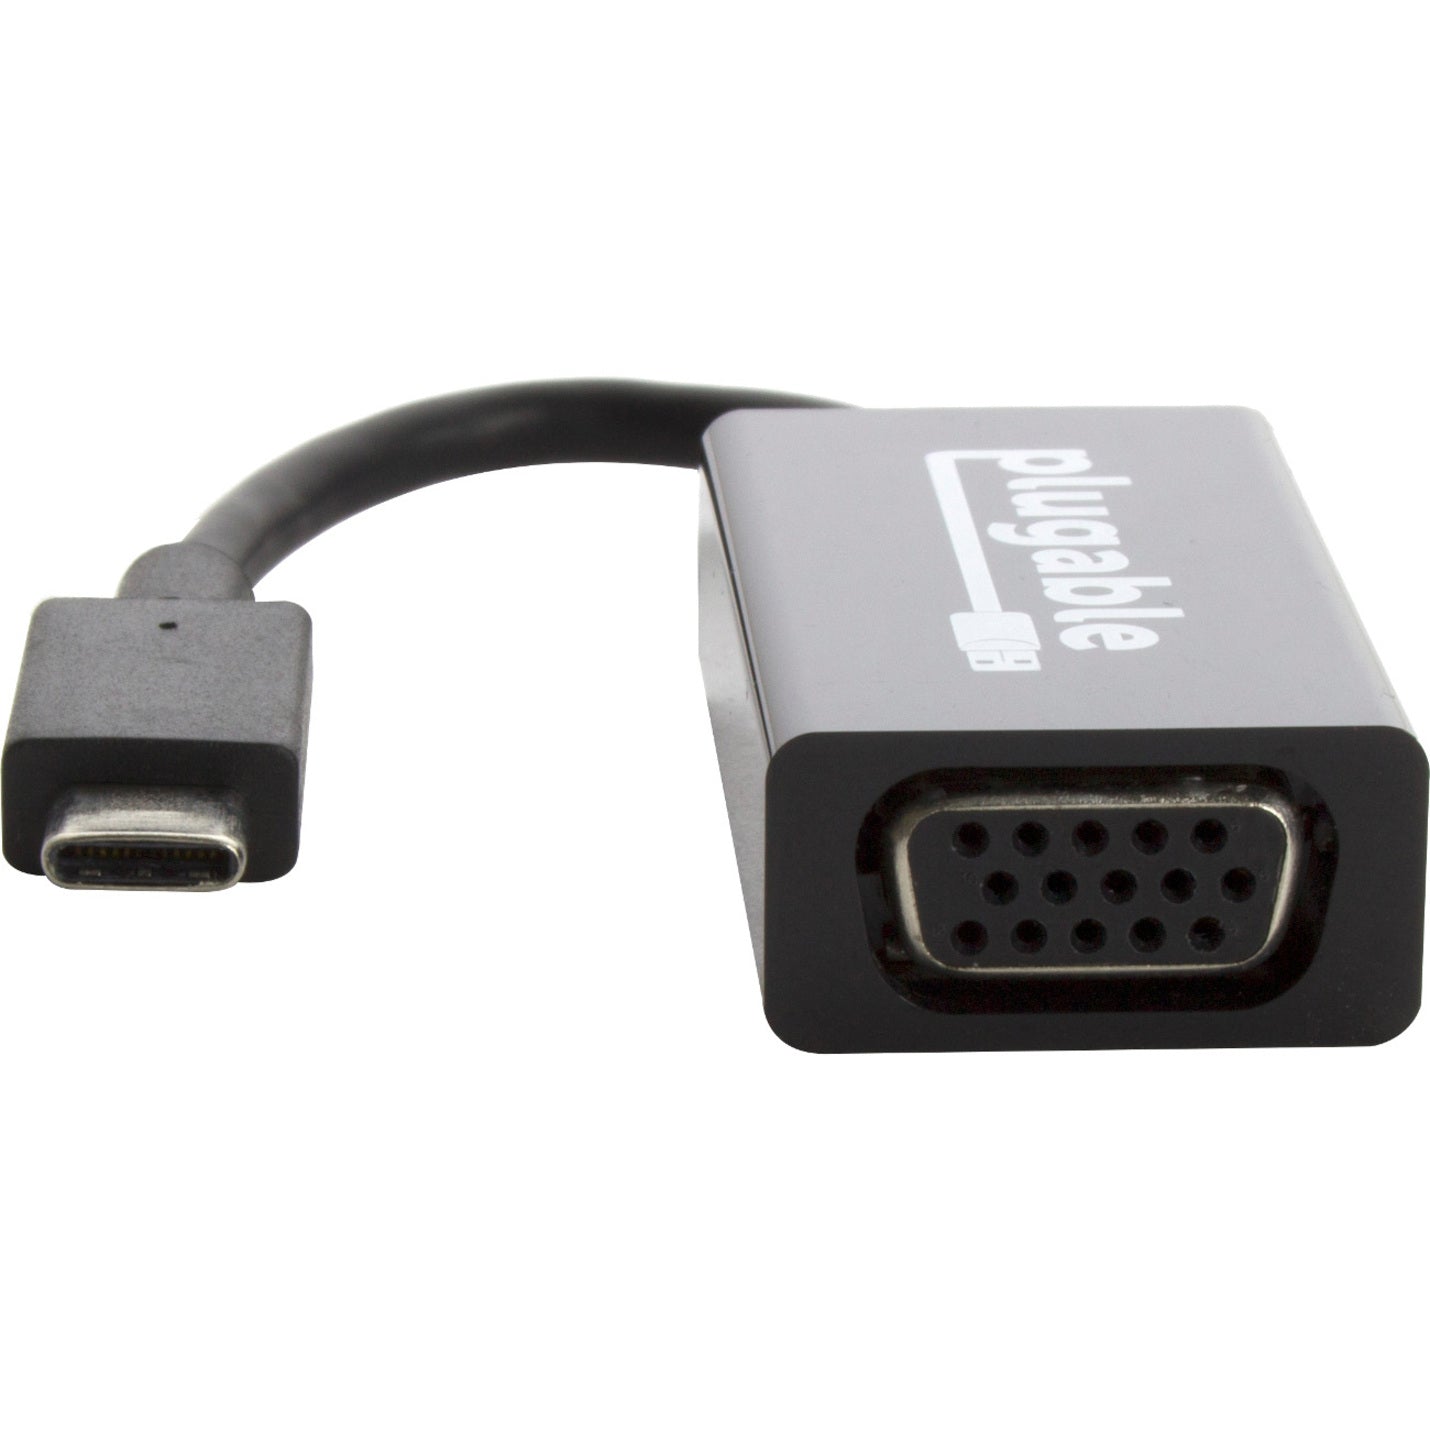 Plugable USBC-VGA USB 3.1 Type-C to VGA Adapter, Plug and Play, 1920 x 1200 Maximum Resolution Supported